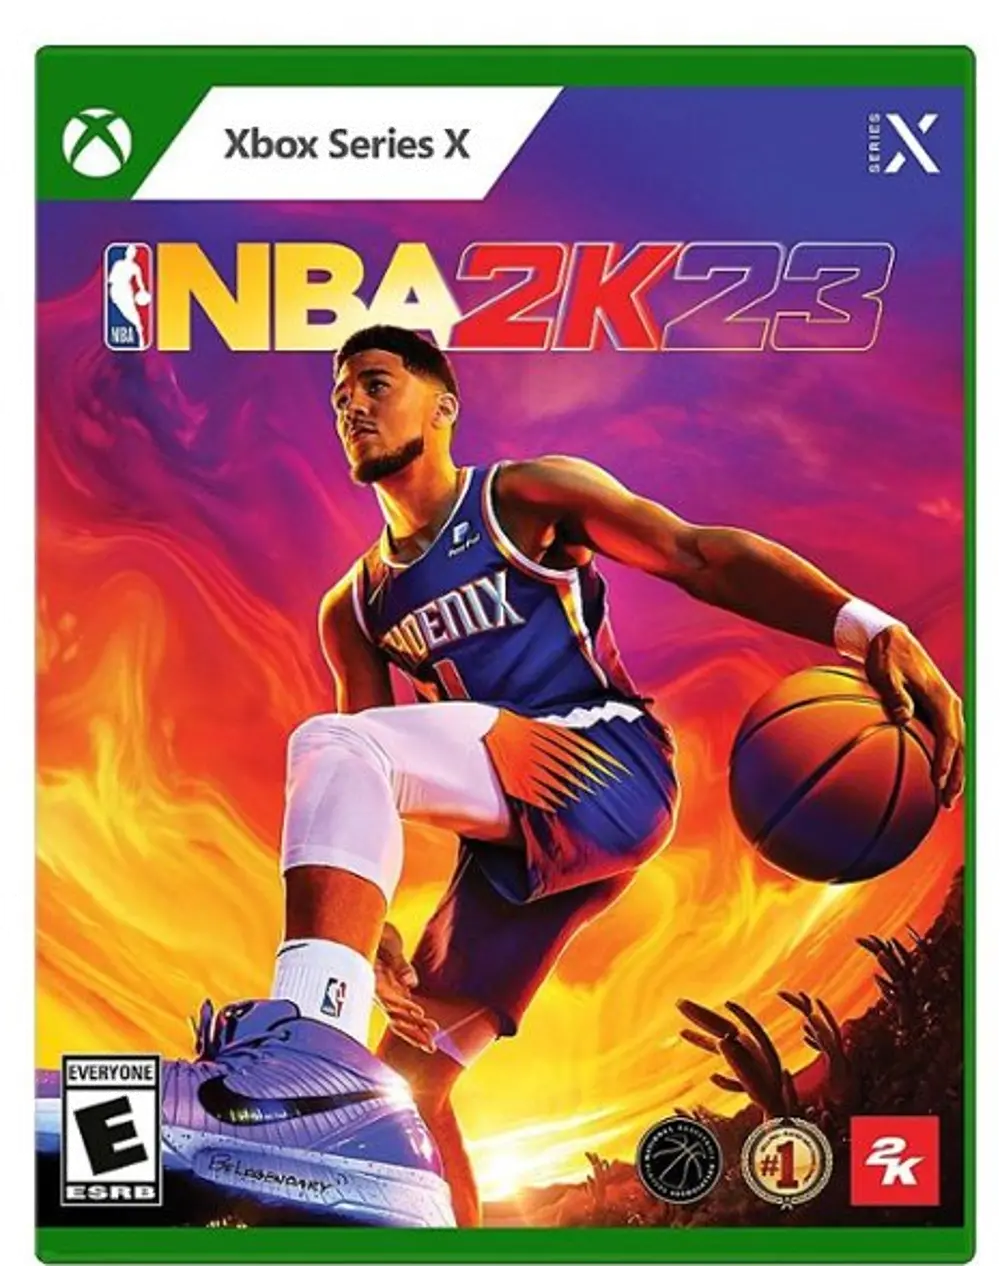 XBSX/NBA_2K23 NBA 2K23 Standard Edition - Xbox Series X-1